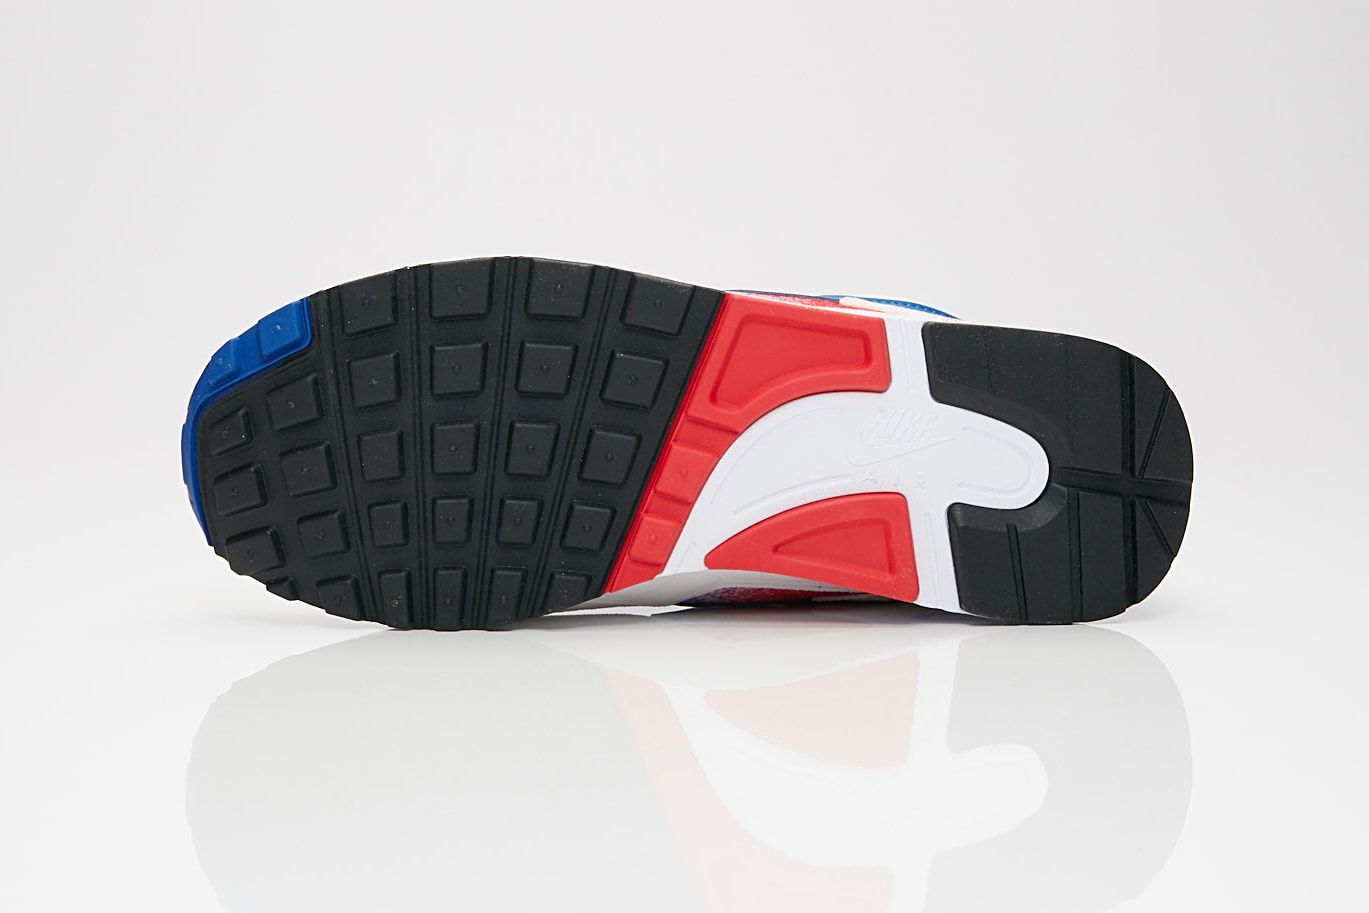 Nike Air Skylon II white red blue colorway retro Release info price purchase sneaker footwear Game Royal University